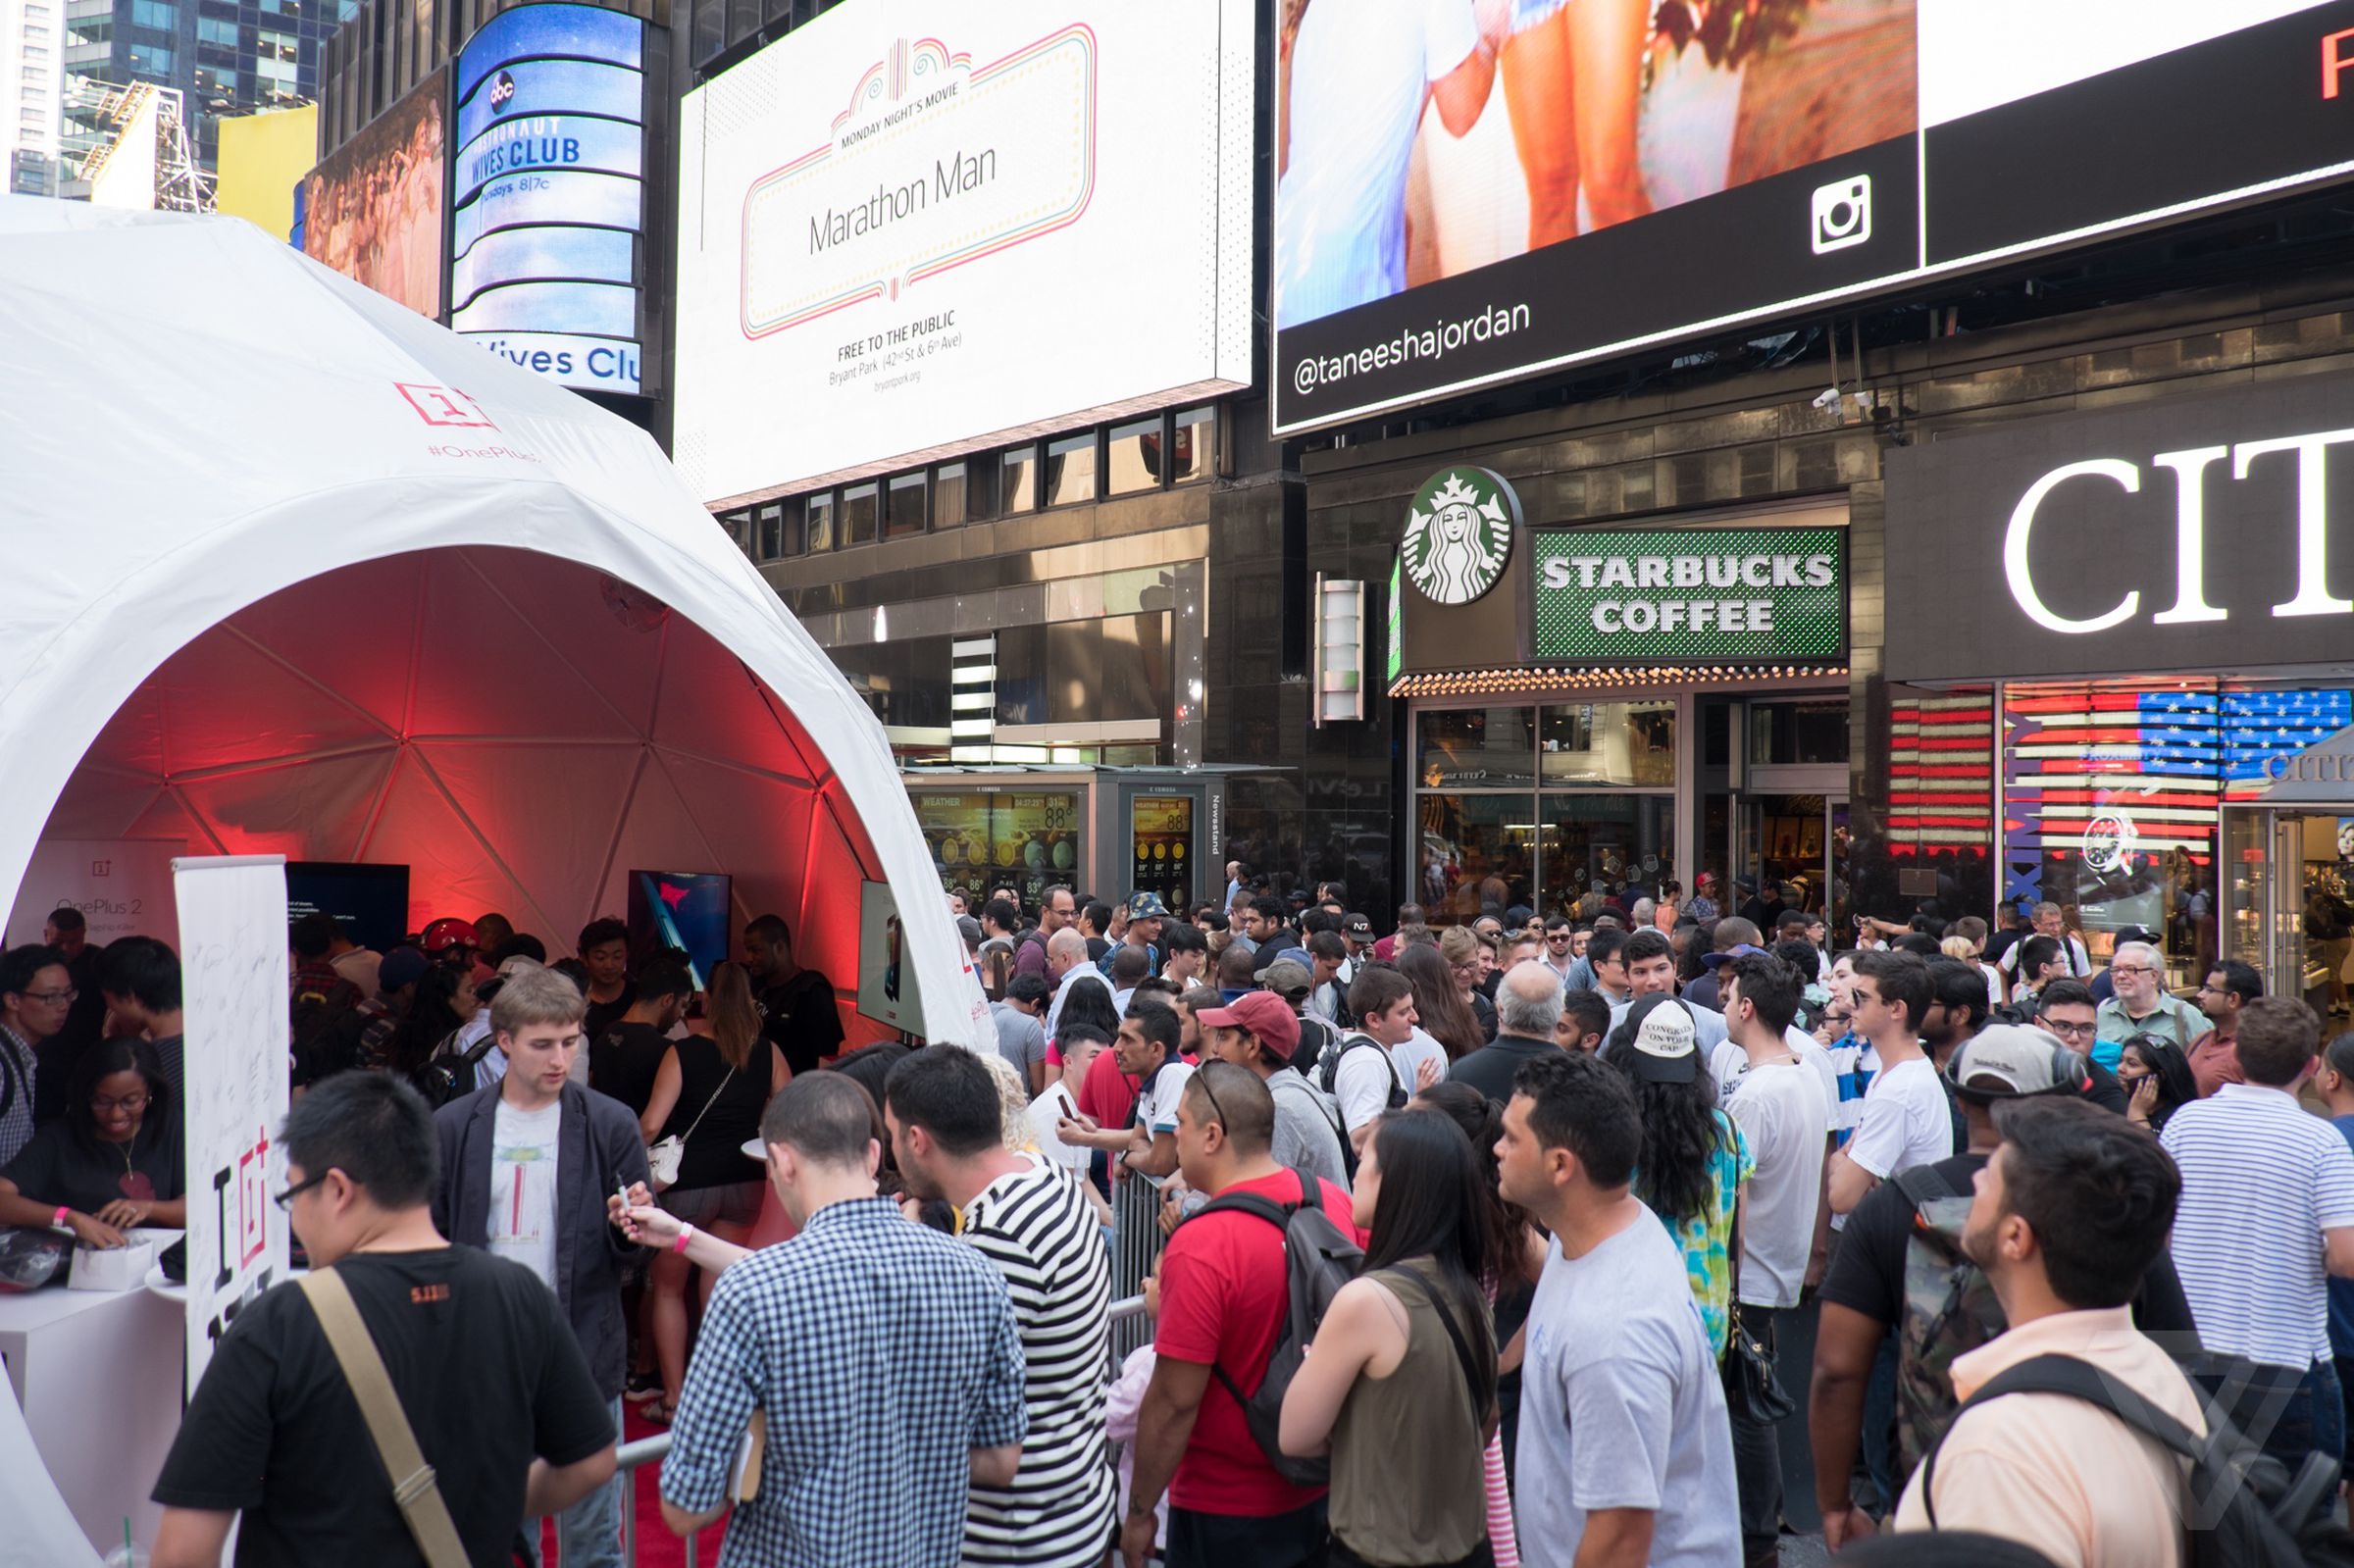 OnePlus Two New York City event photos